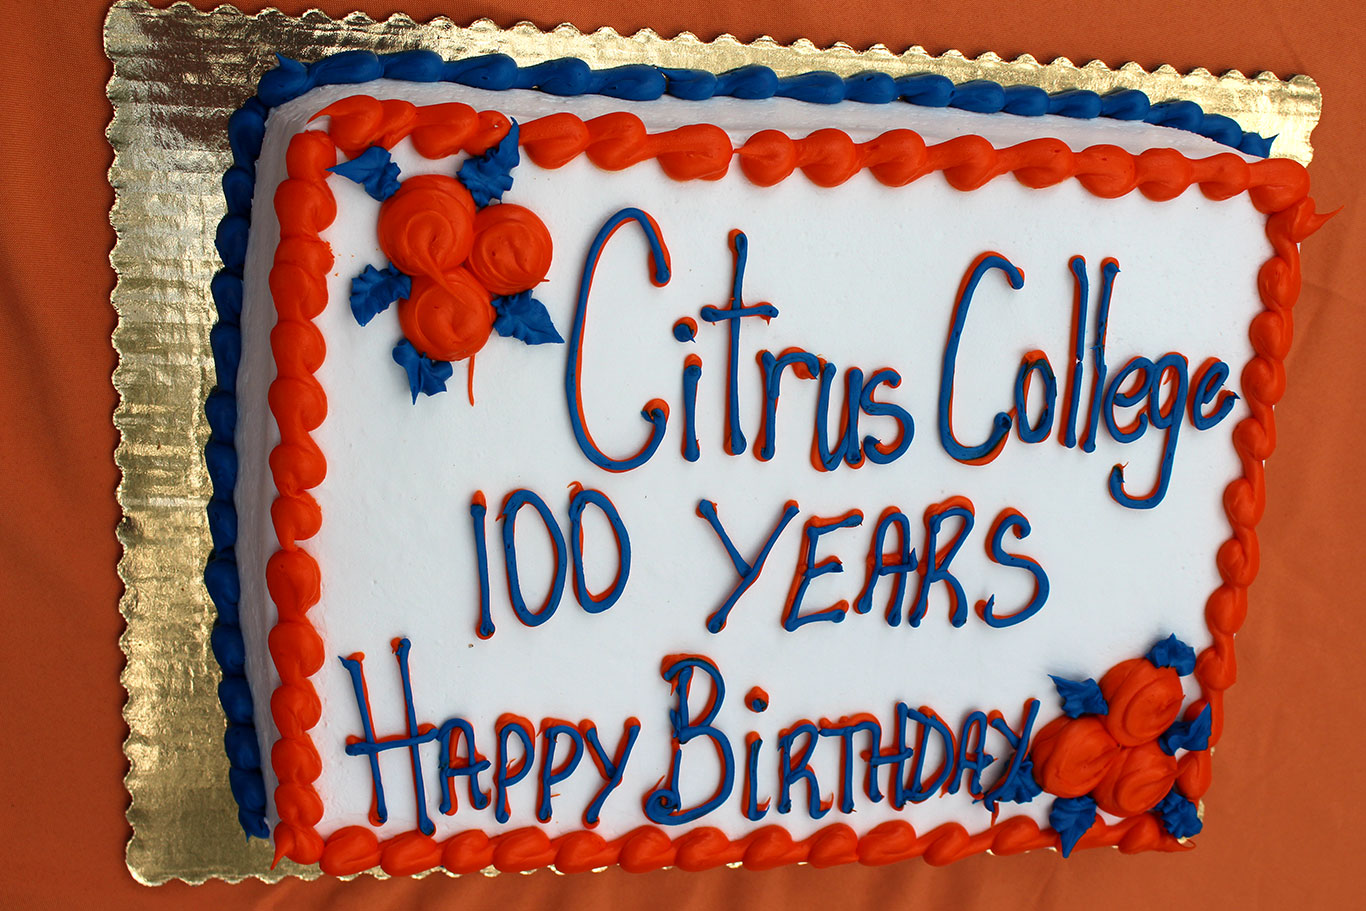 Celebrating a century: Happy Birthday Citrus